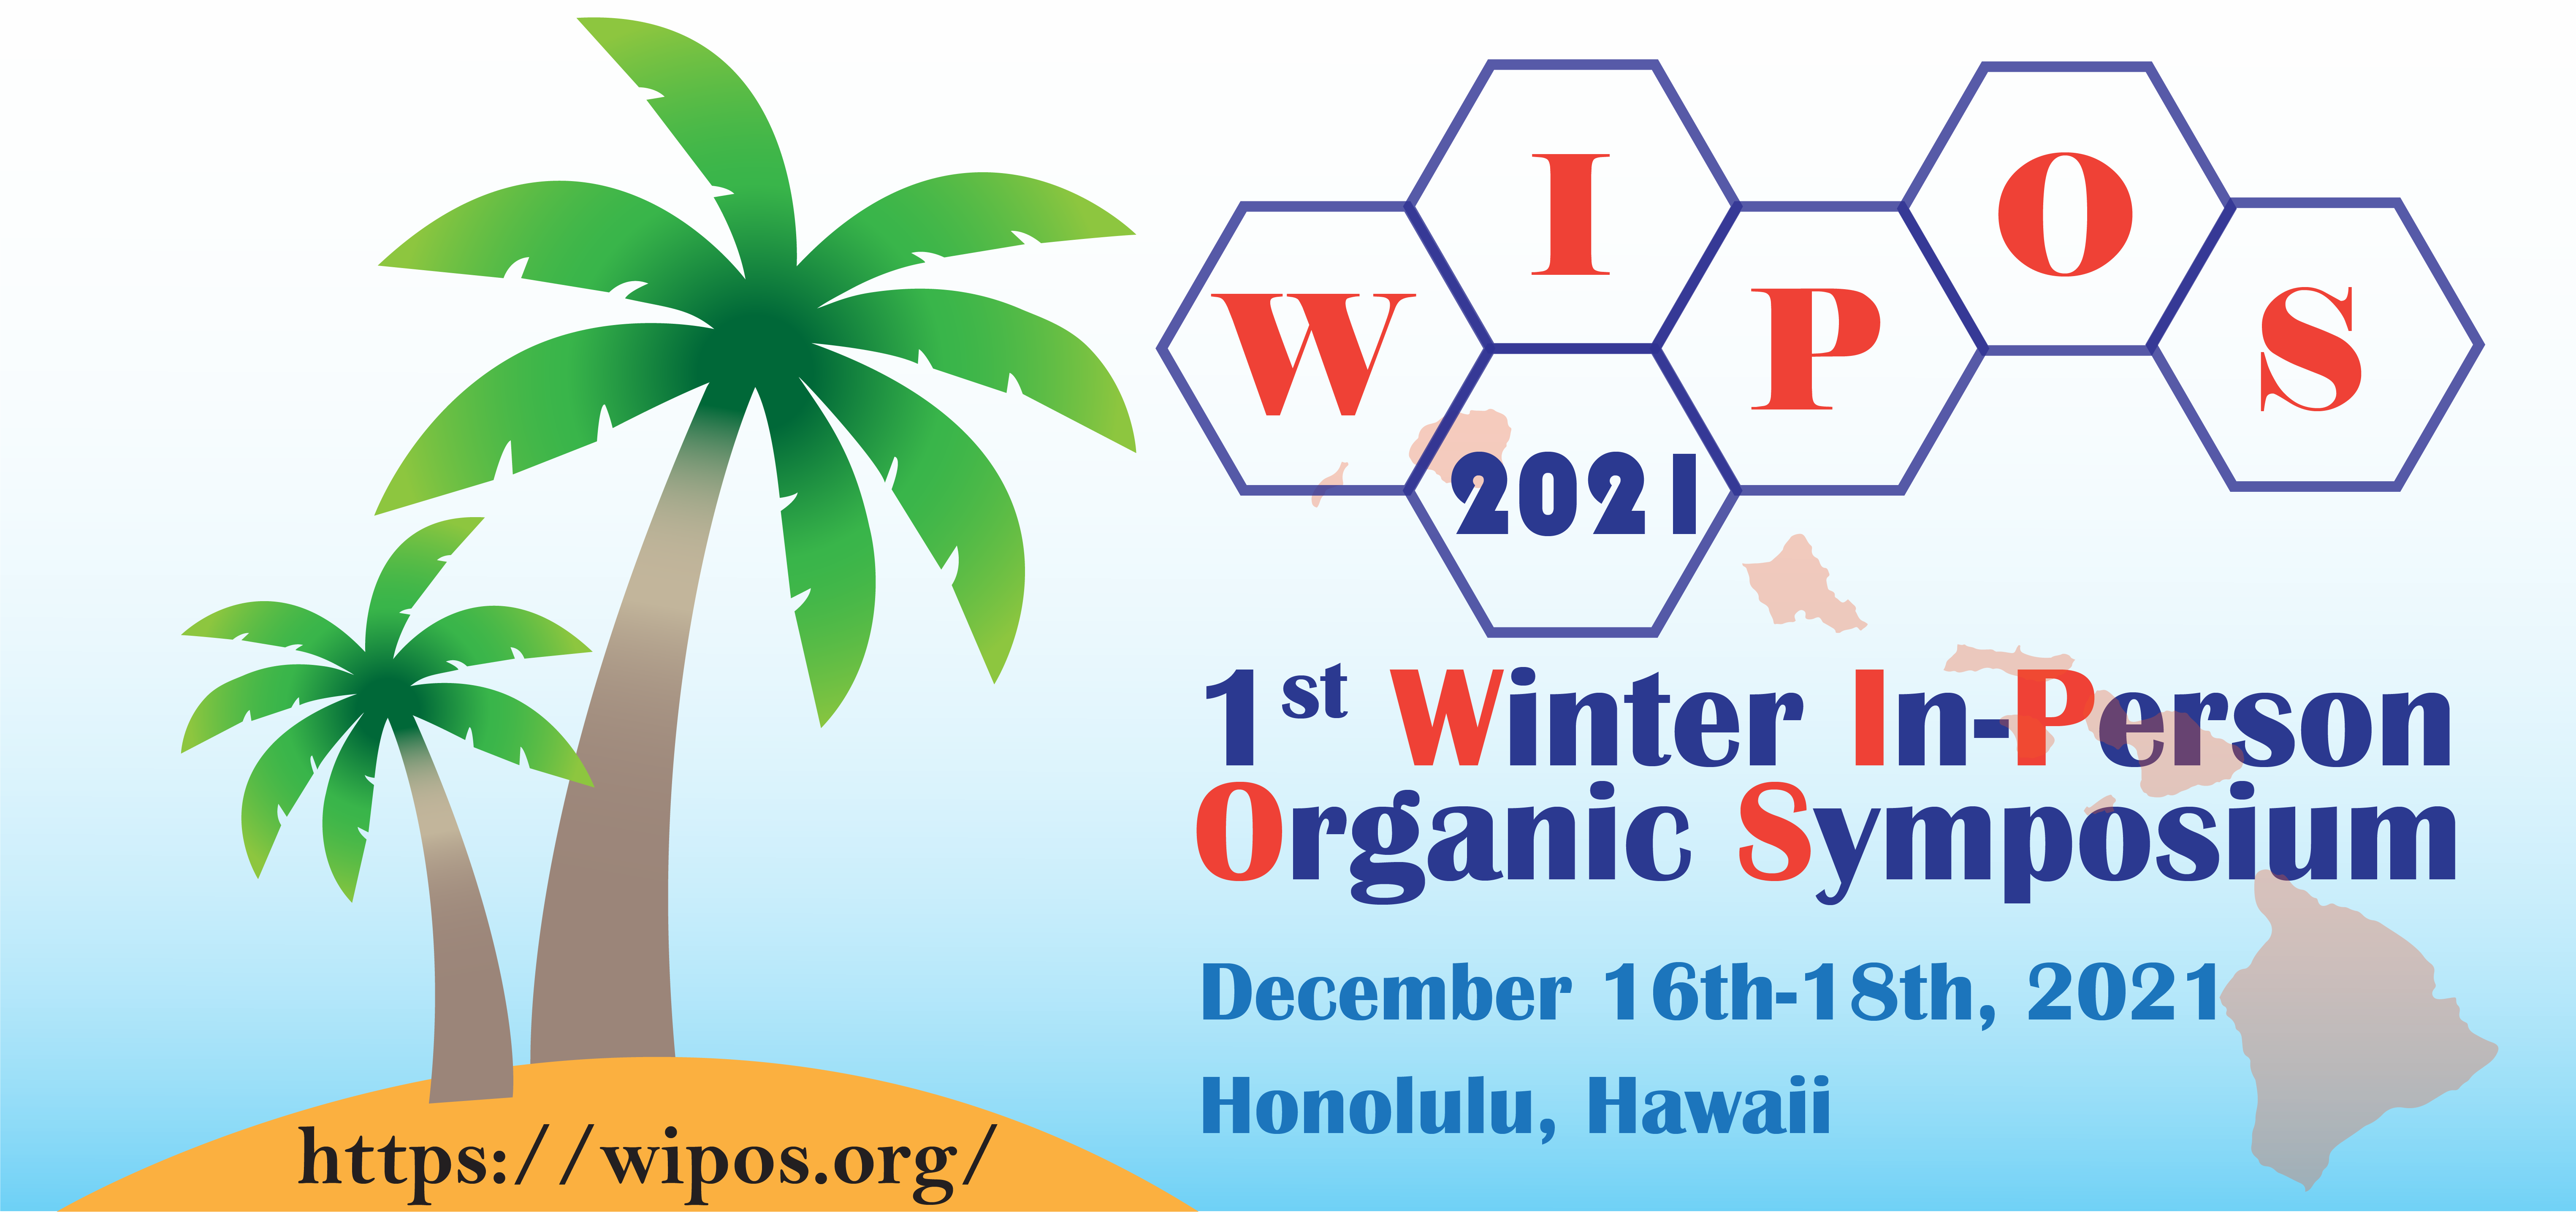 WIPOS 2021
1st Winter In-Person Organic Symposium
December 16th-18th, 2021
Honolulu, Hawaii